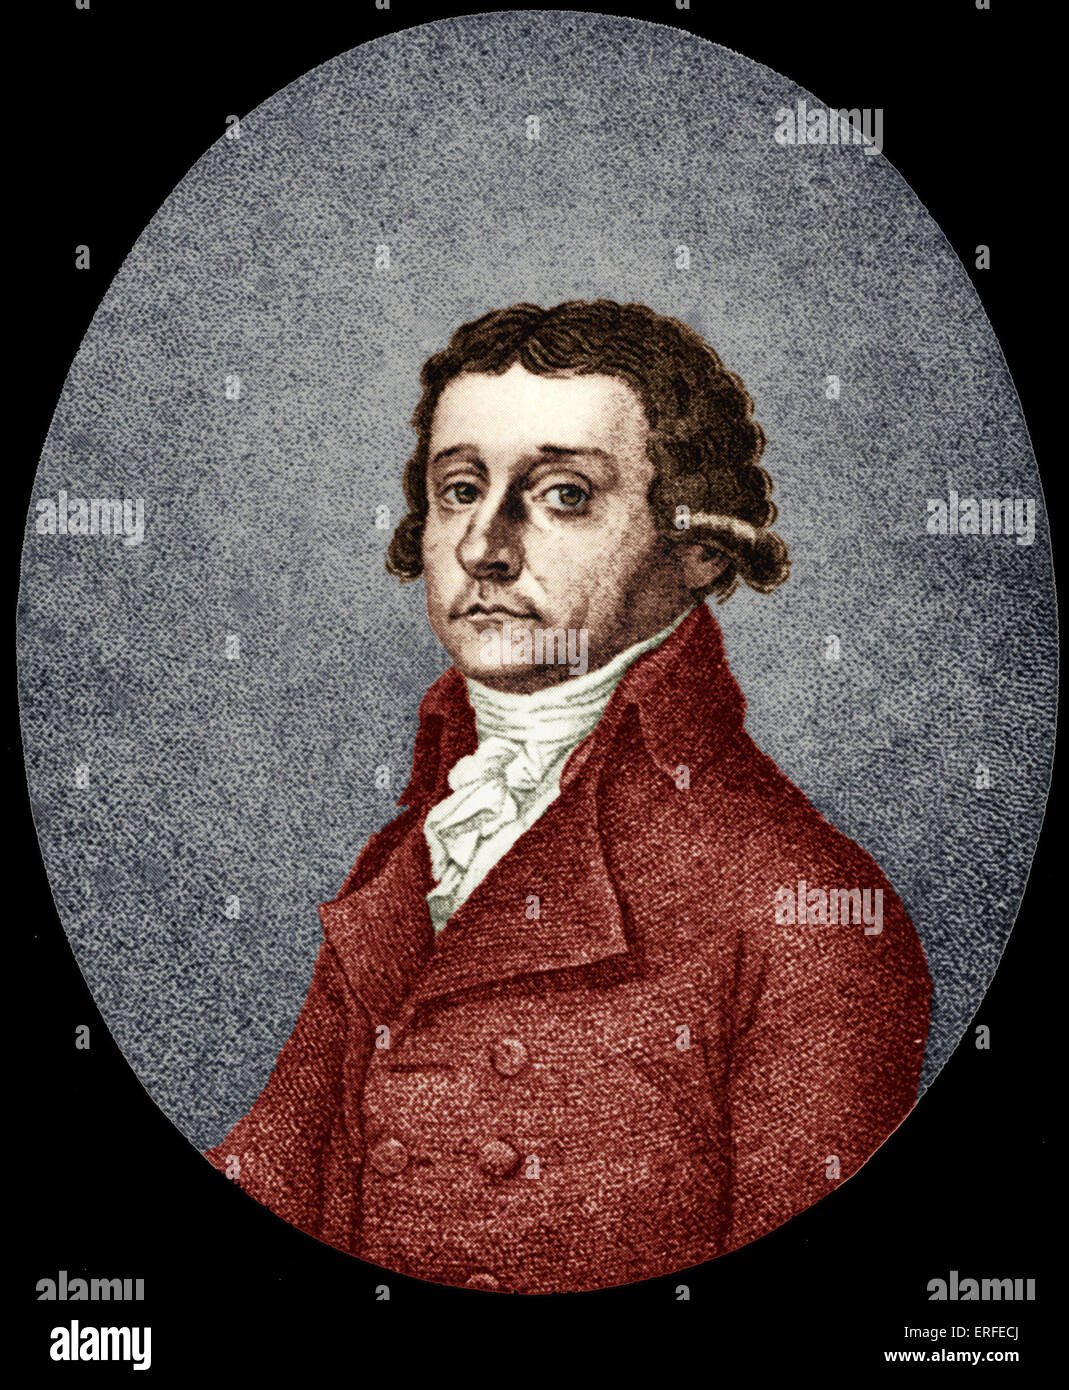 Antonio Salieri Italian composer, conductor and teacher, 1750-1825. Stock Photo